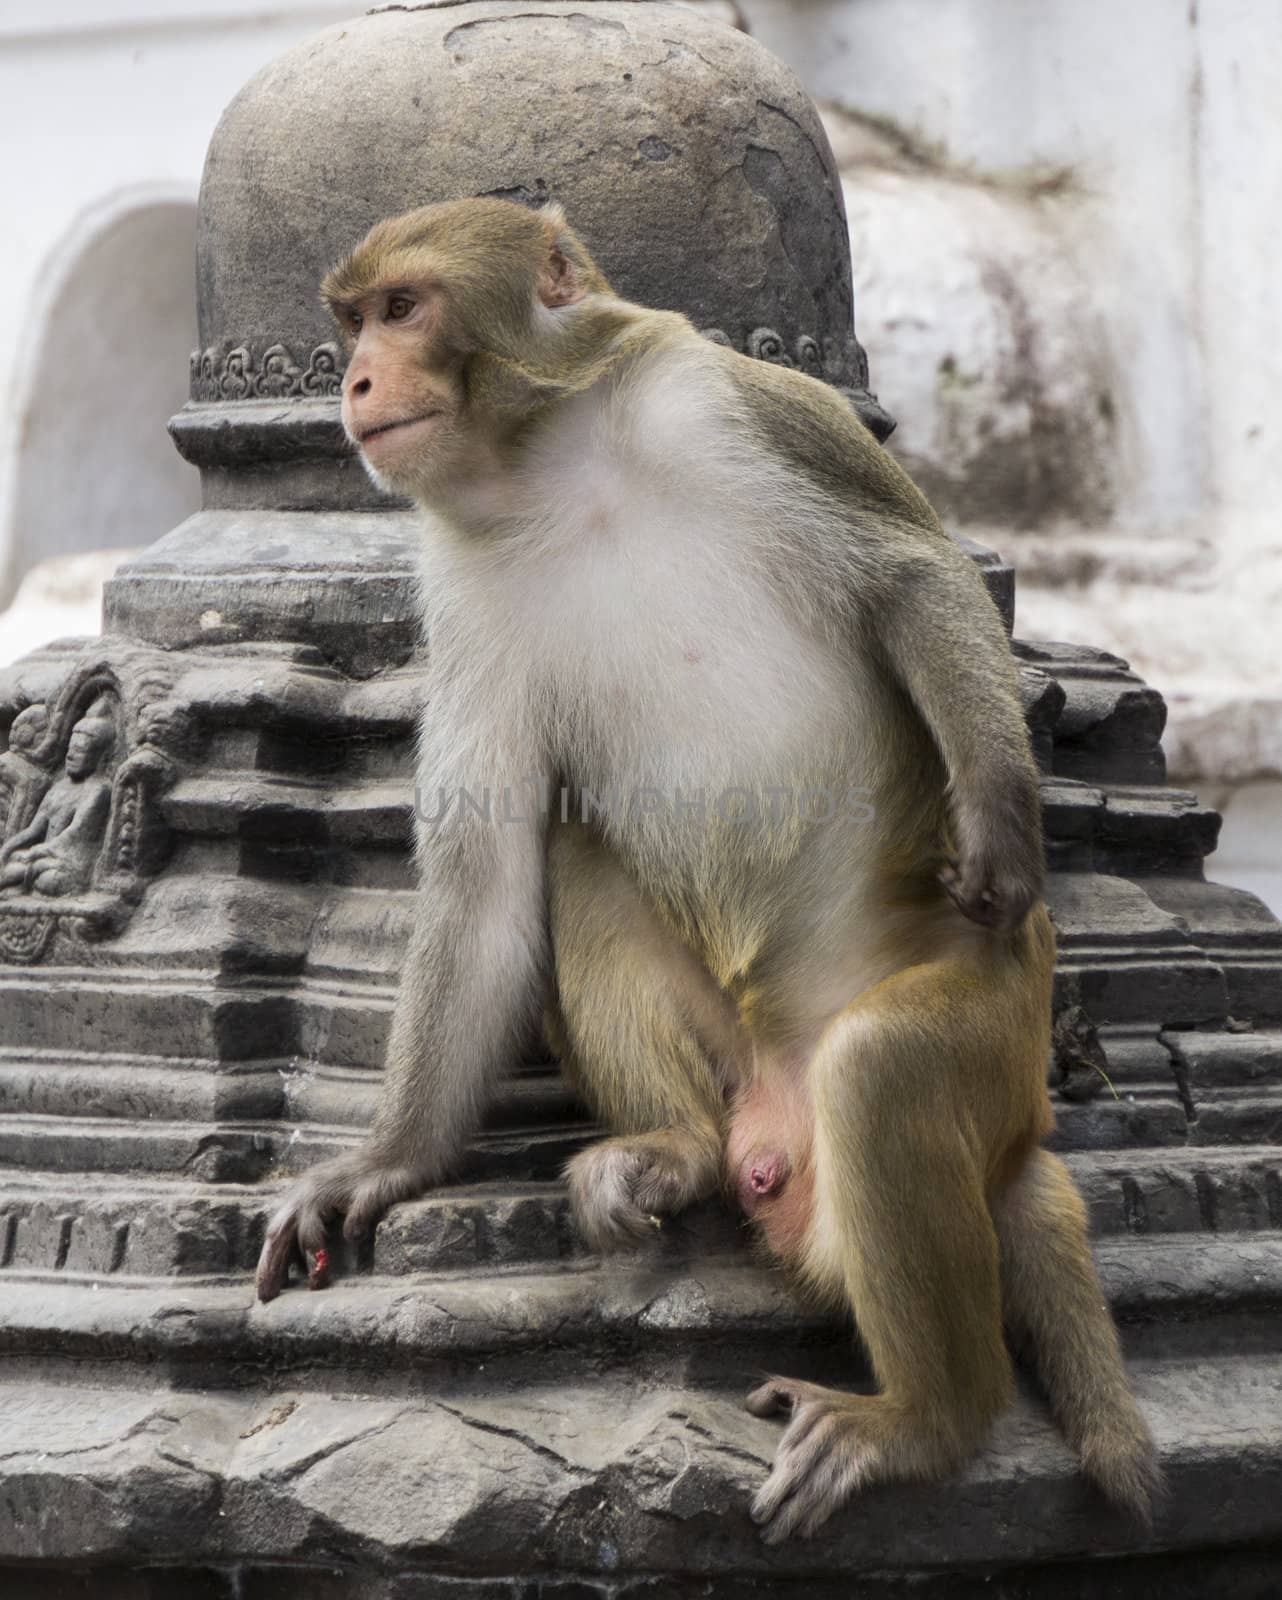 single monkey in nepal sitting on stone. vertical image.